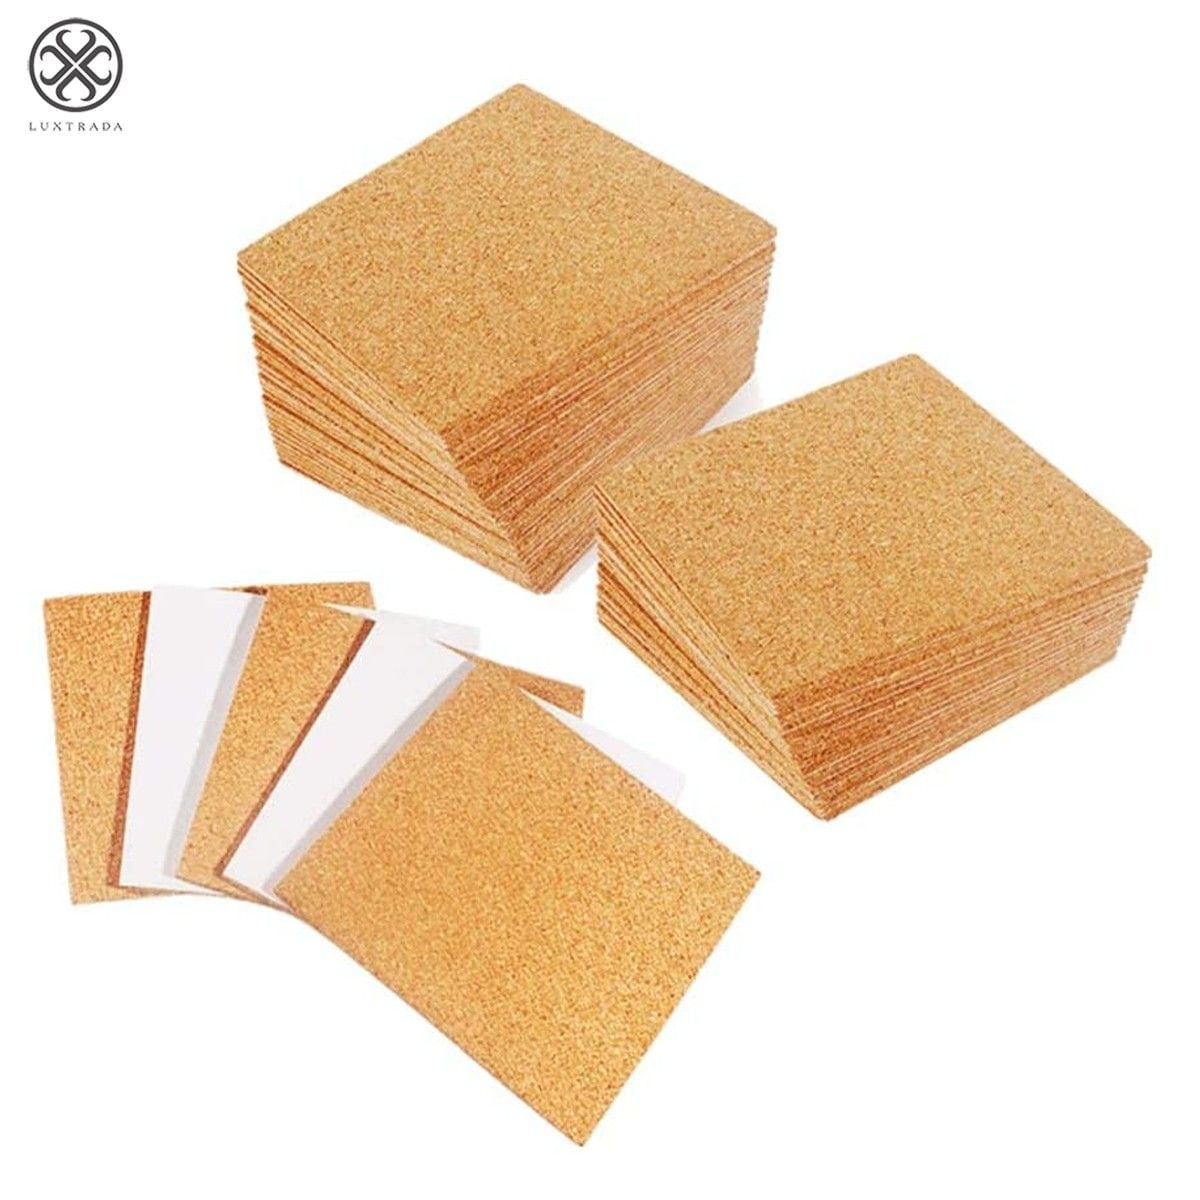 10-50pcs Self-Adhesive Cork Squares Round Tiles Cork Backing Sheets for Coasters 